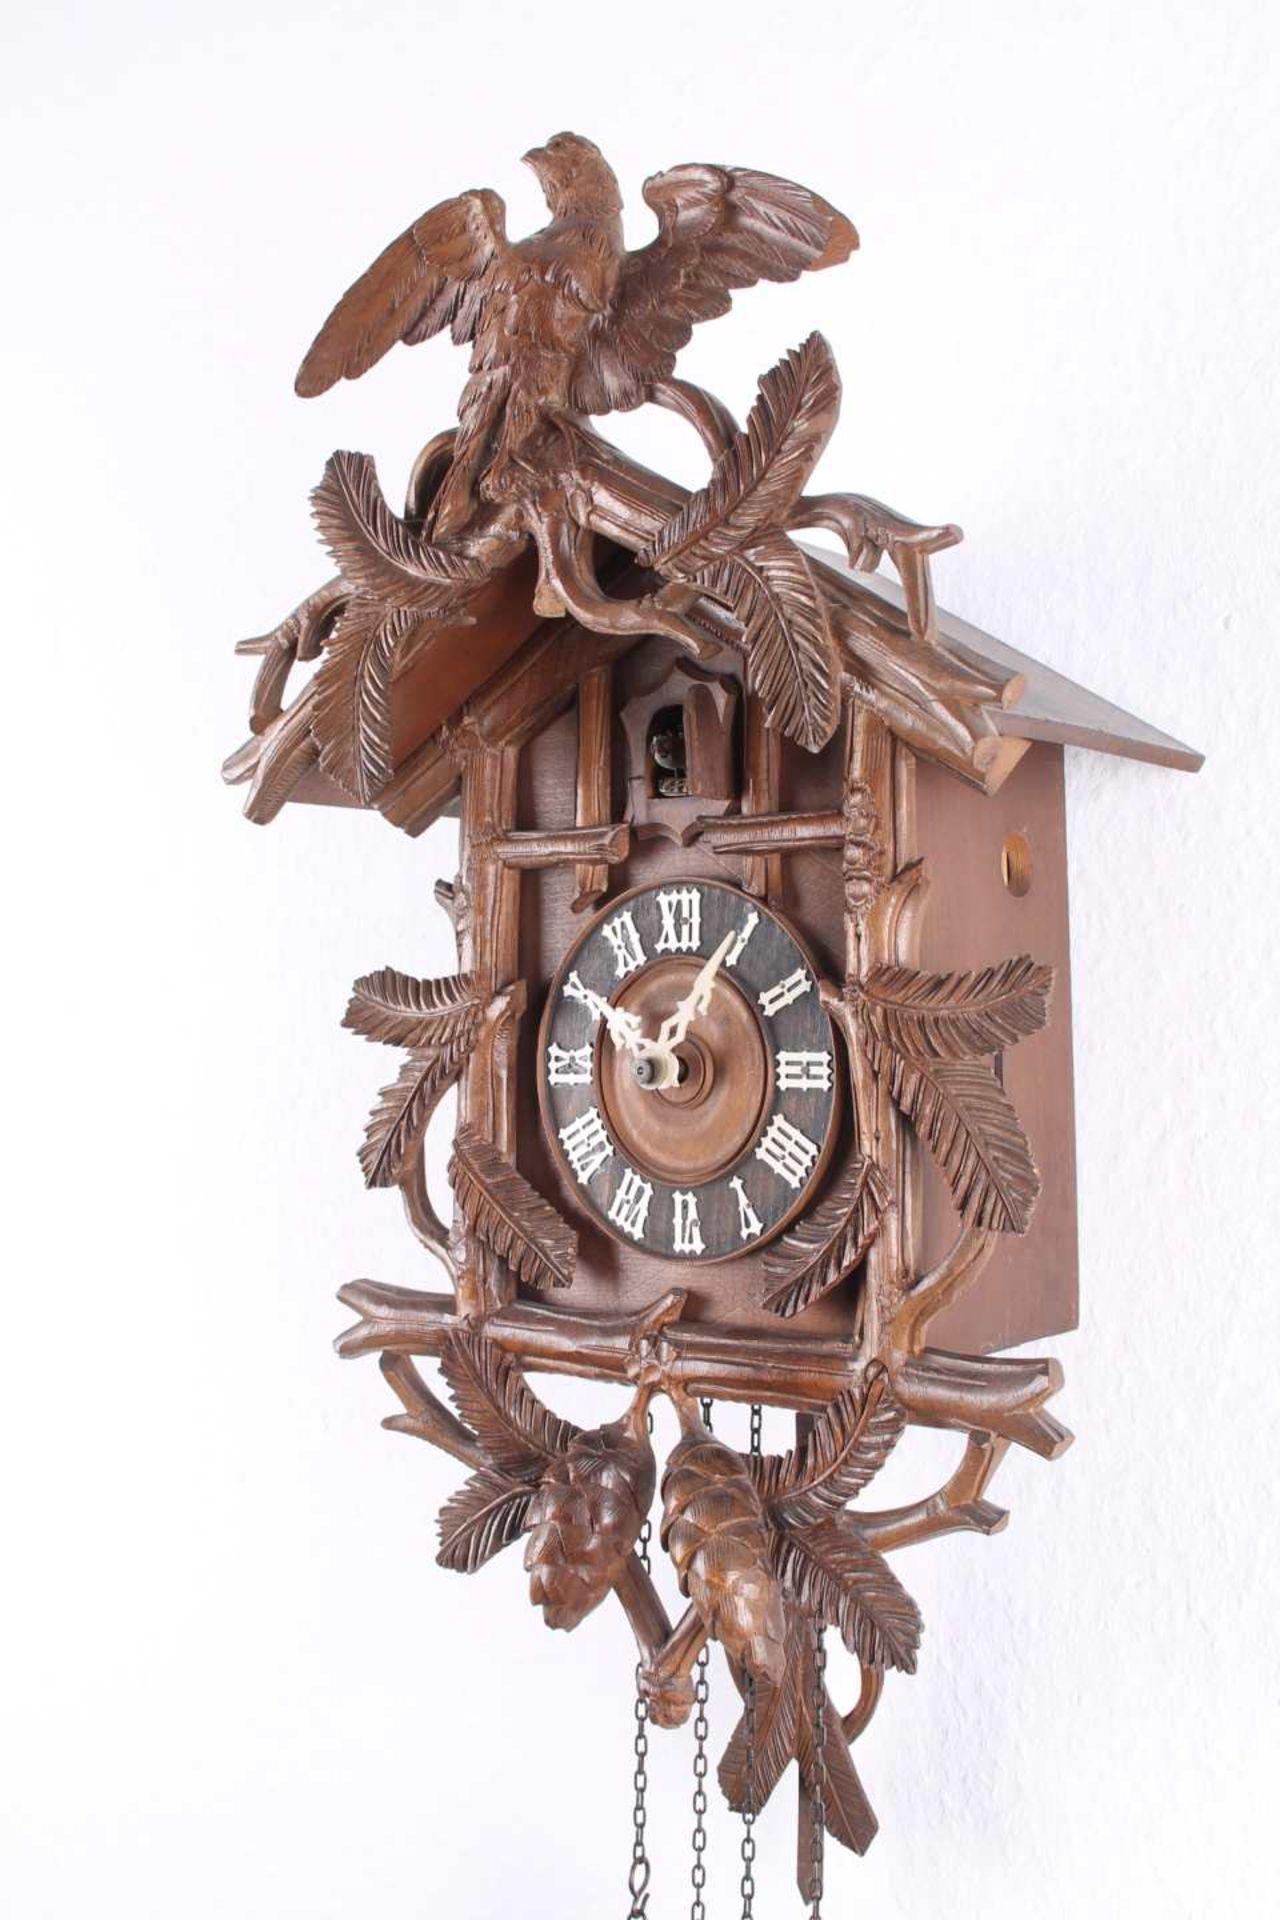 Schwarzwald Kuckucksuhr, blackforest cuckoo clock, - Image 3 of 4